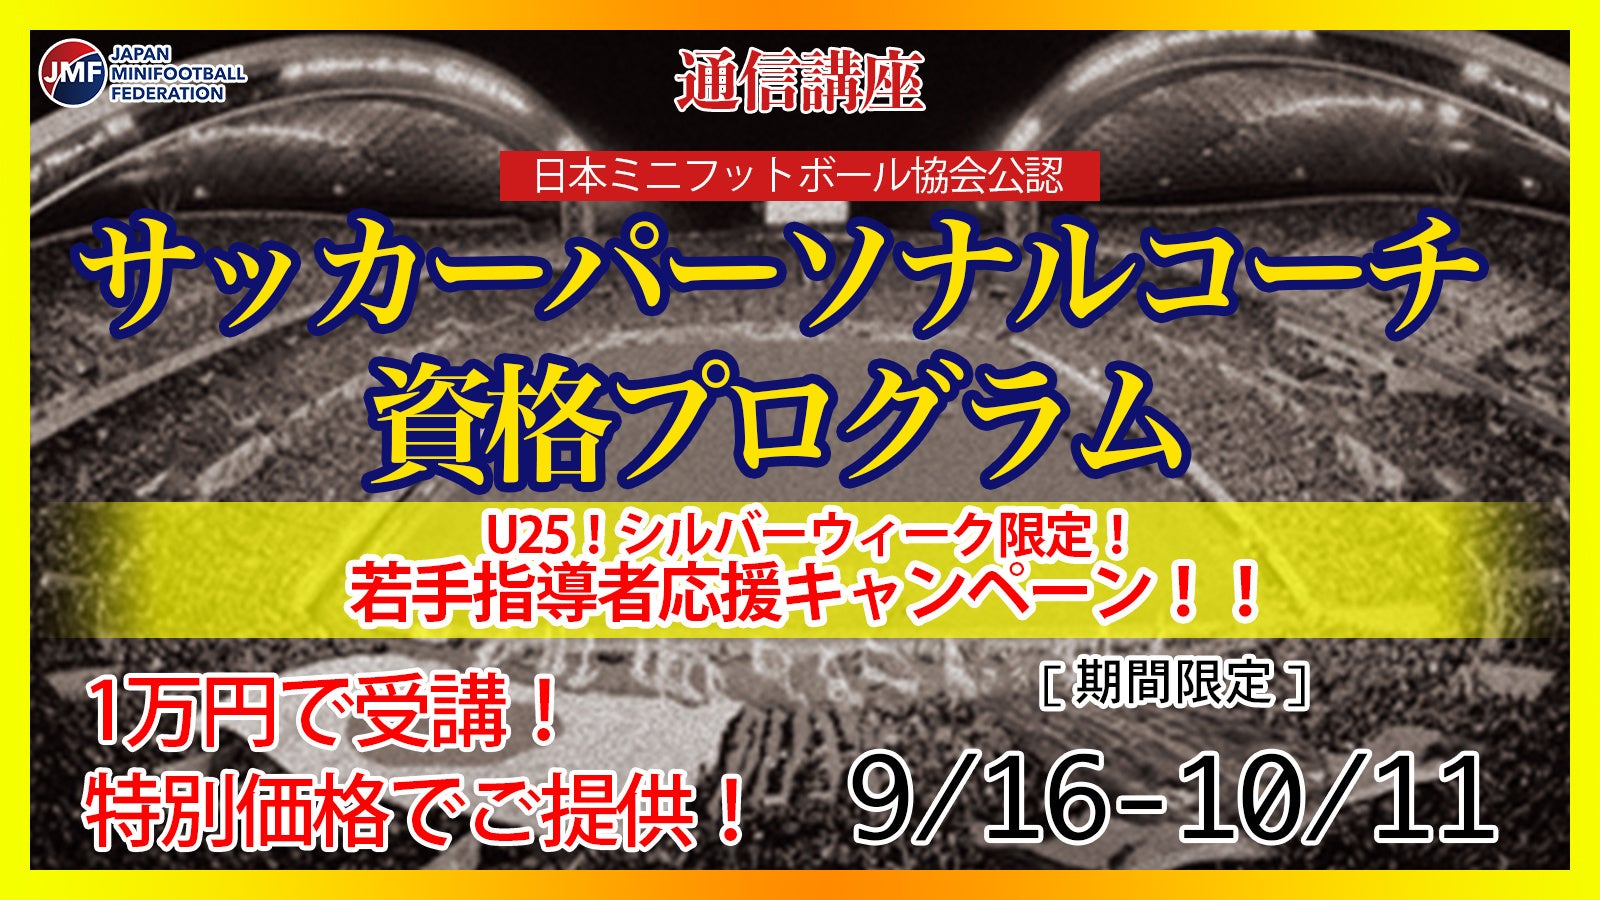 ProVisionアスリート社員の原口翔太郎選手、川口敬介選手が所属する東京ヴェルディBSが、「JFA 第17回全日本ビーチサッカー大会」にて優勝しました